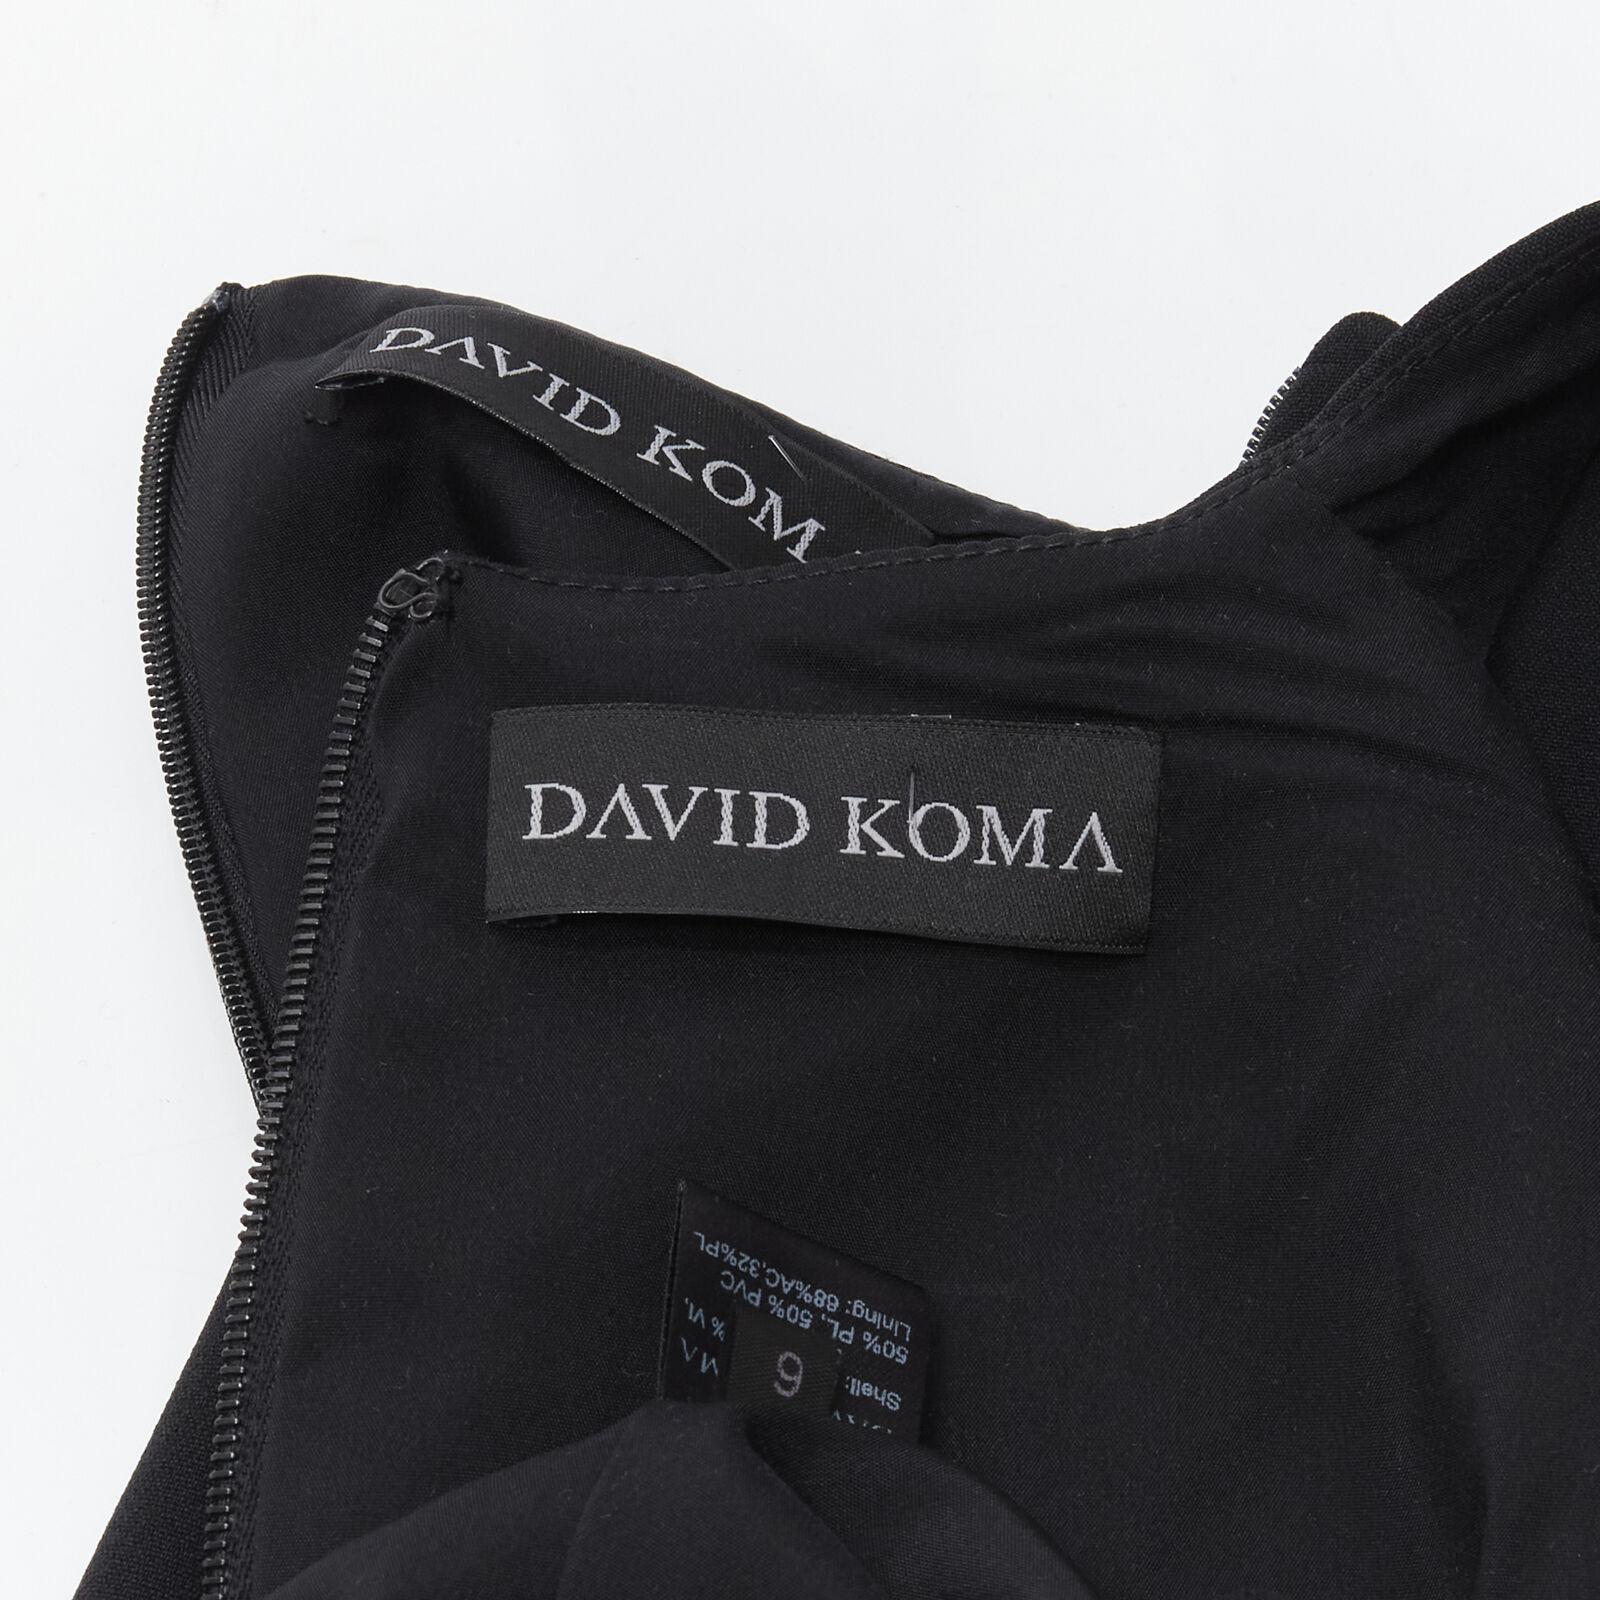 DAVID KOMA silver sequins midriff crop top asymmetric high slit skirt set UK6 XS For Sale 3